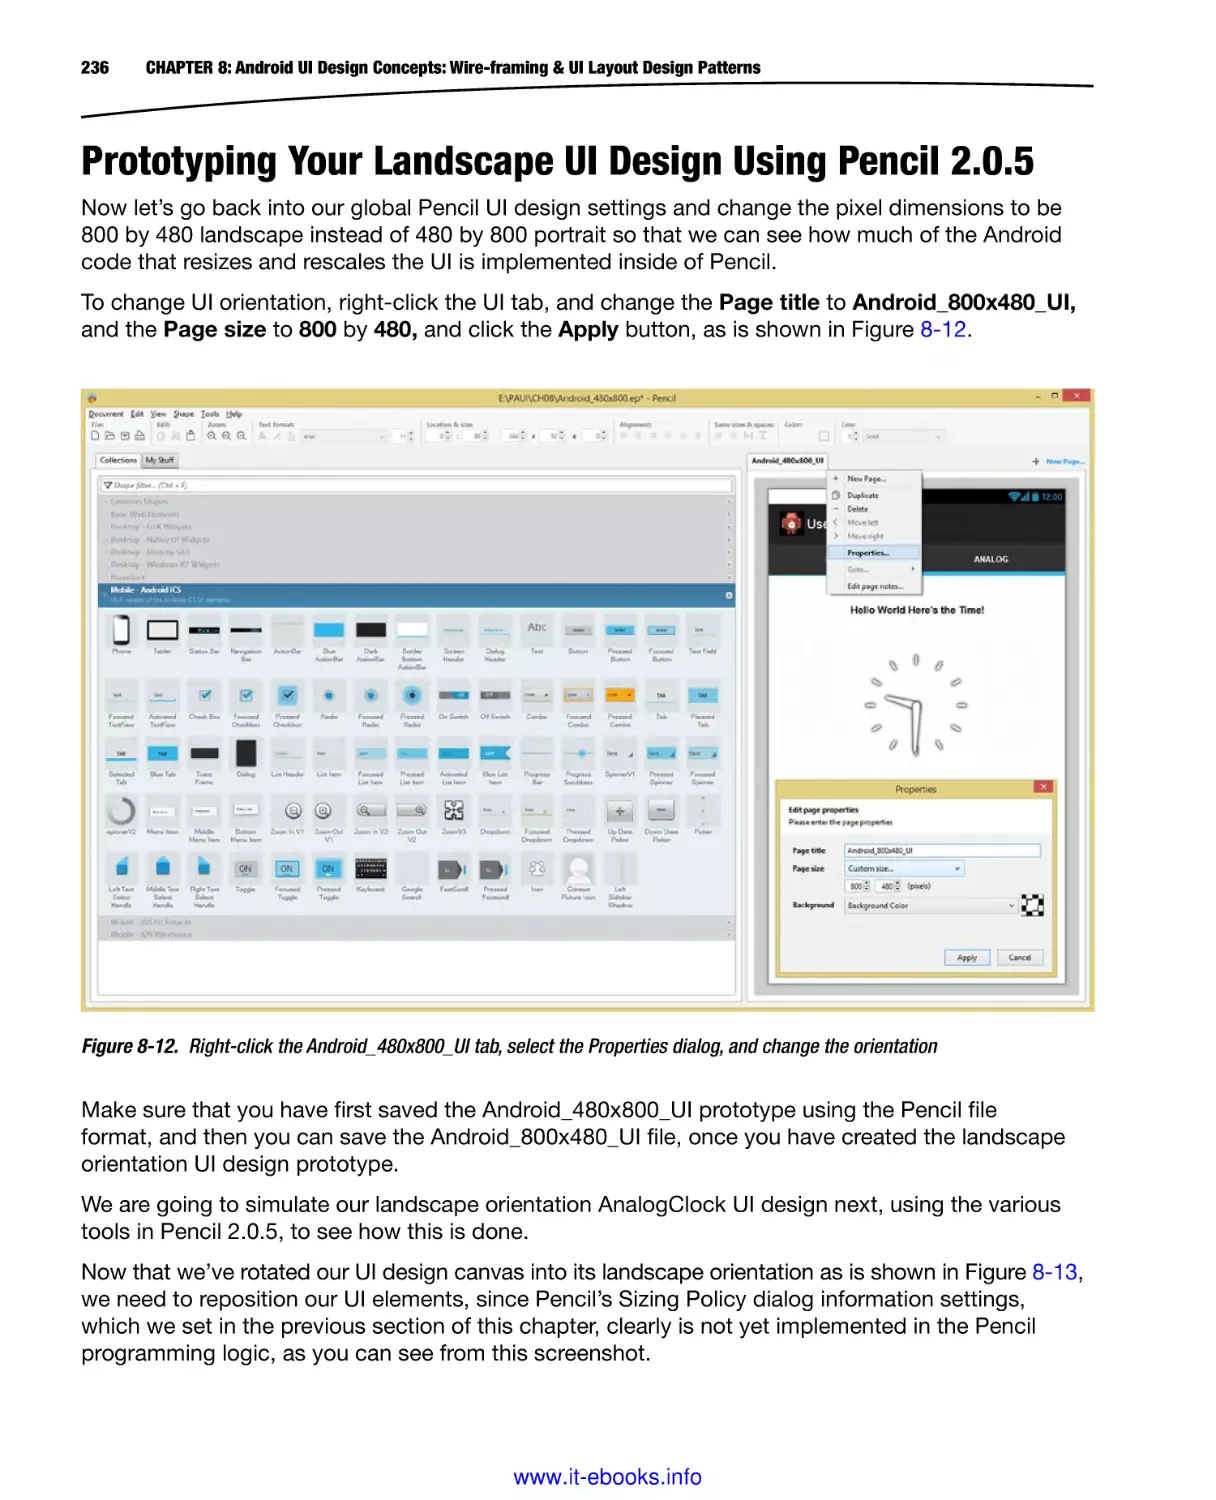 Prototyping Your Landscape UI Design Using Pencil 2.0.5